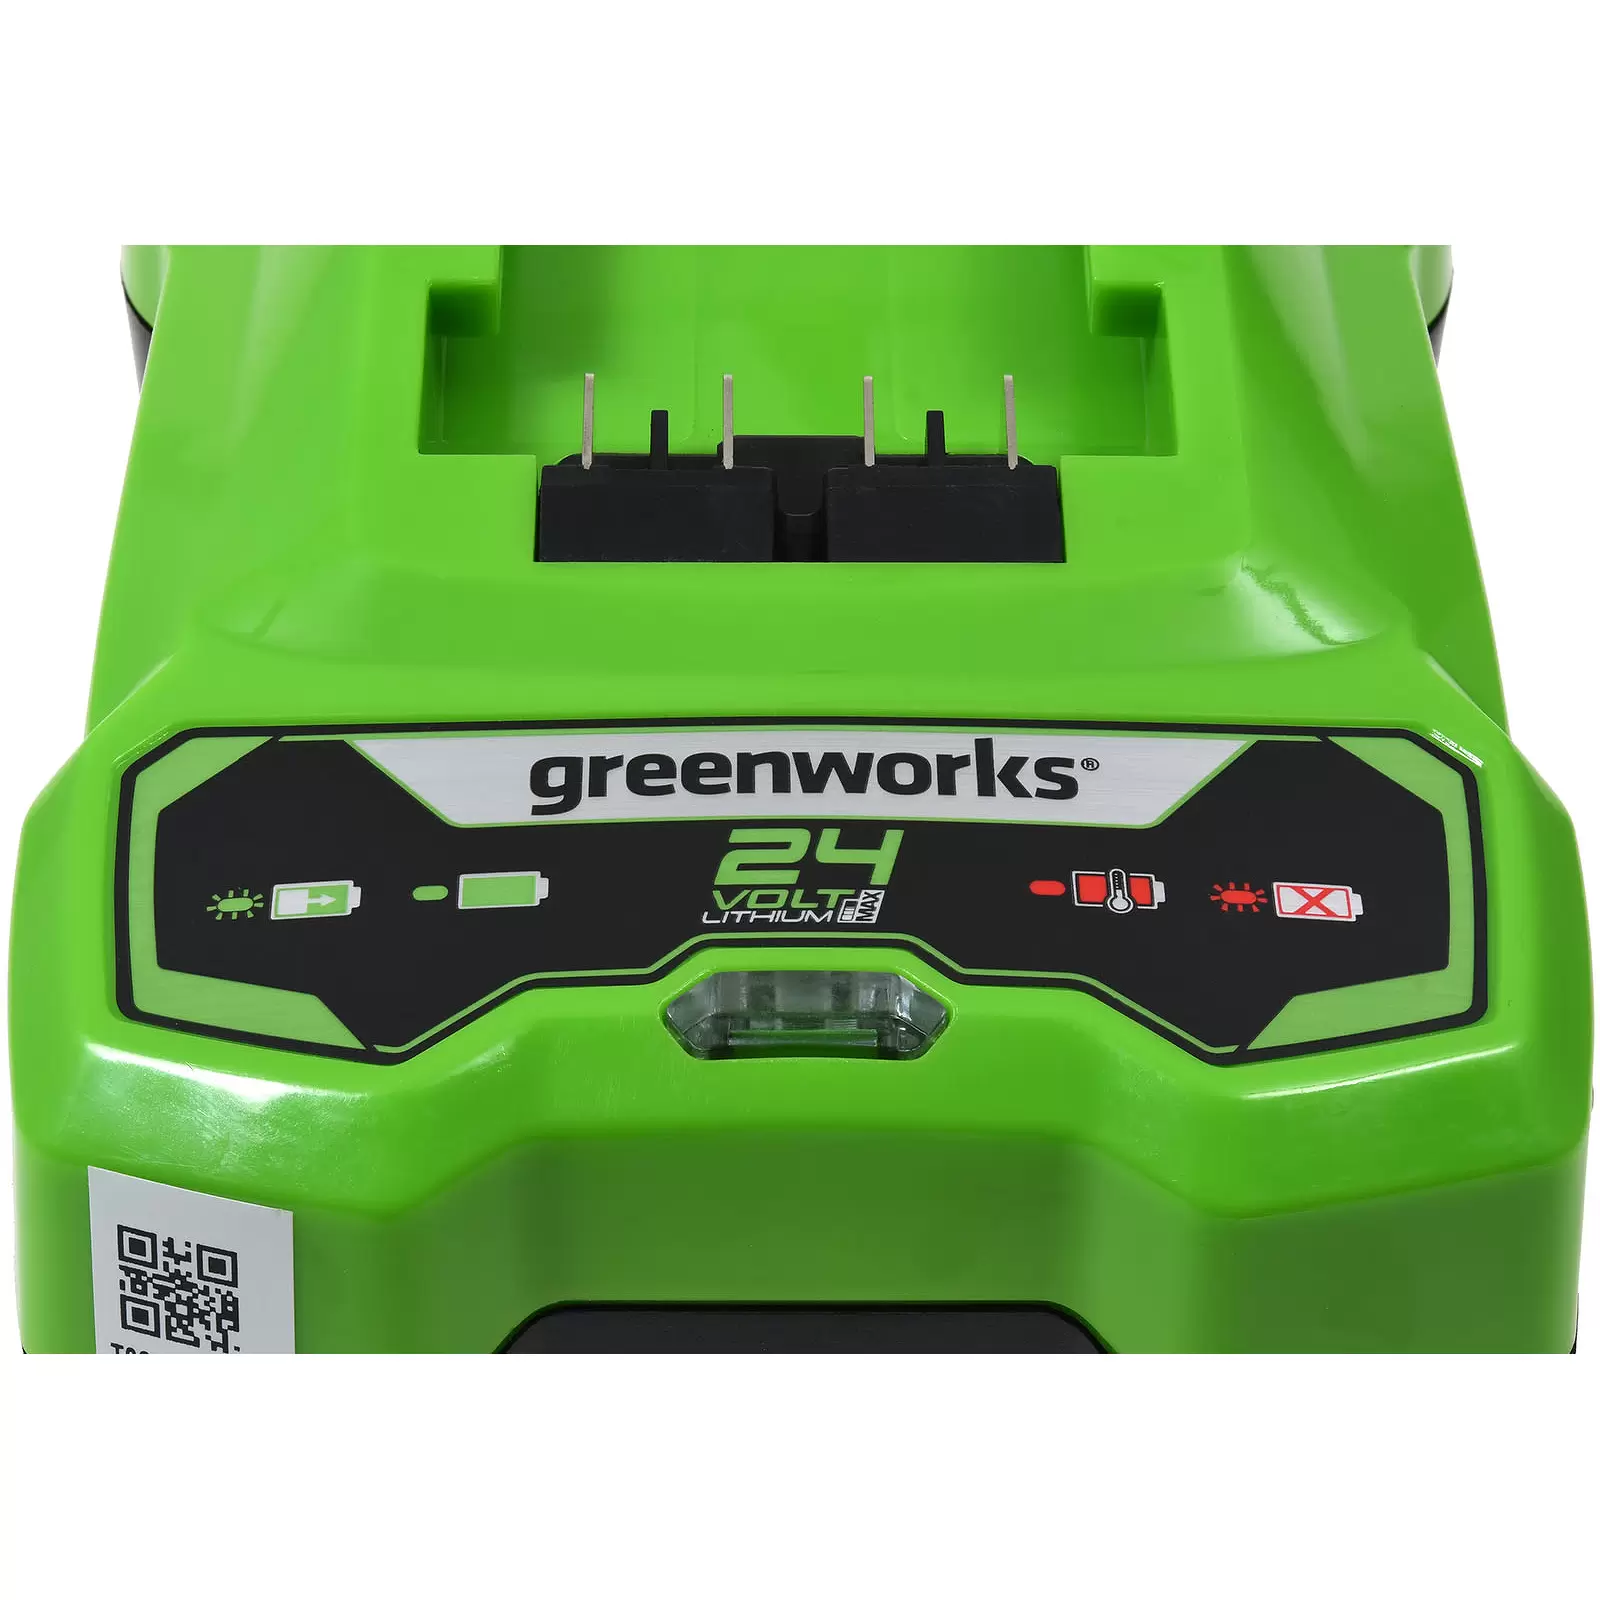 Schnell-Ladegerät Greenworks Tools G24C 24V Li-Ion, für 24V Li-Ion Greenwork-Akkus z.B. G24B2, G24B4